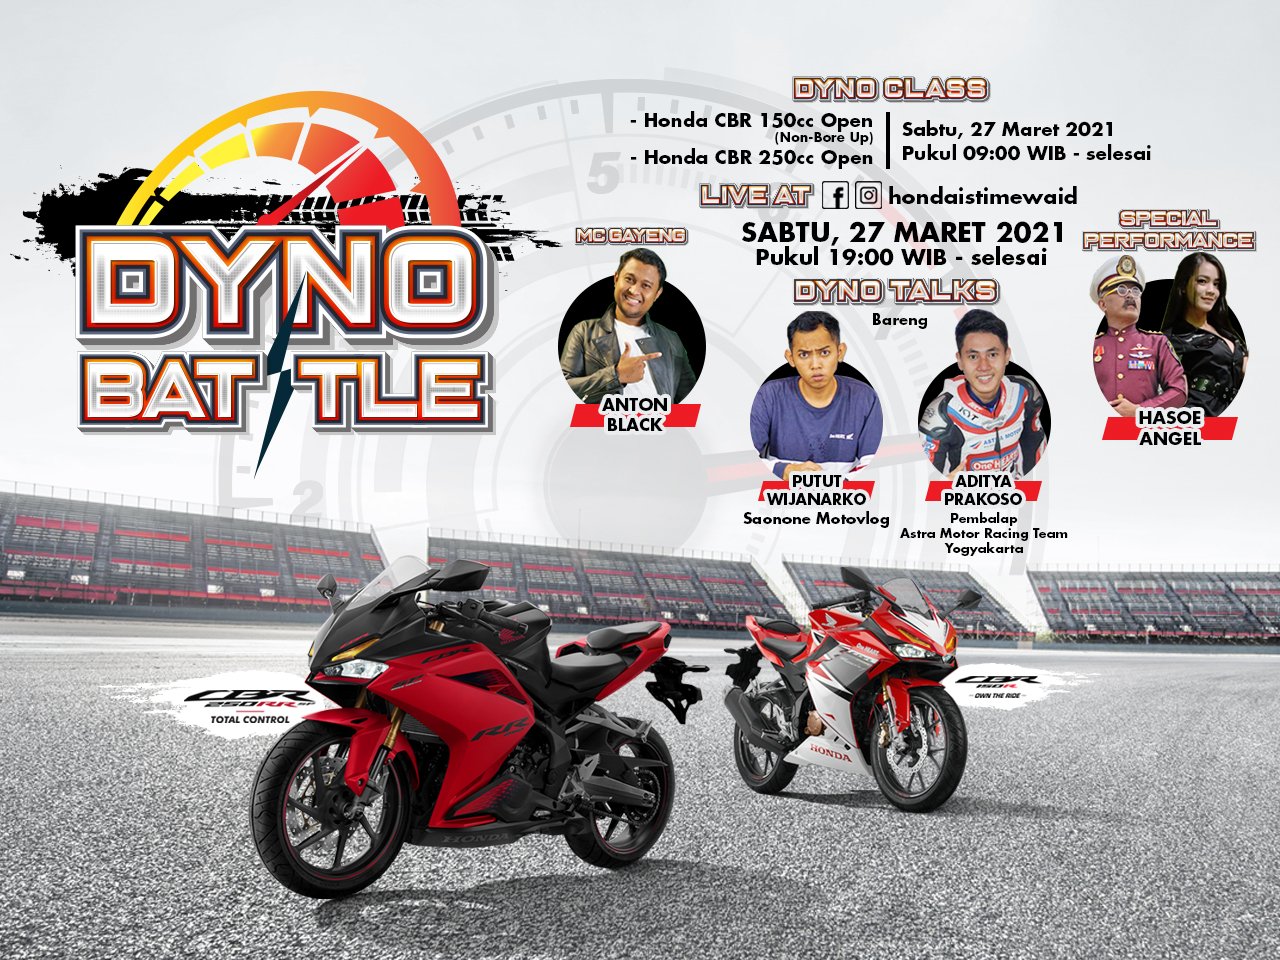 Honda Dyno Battle